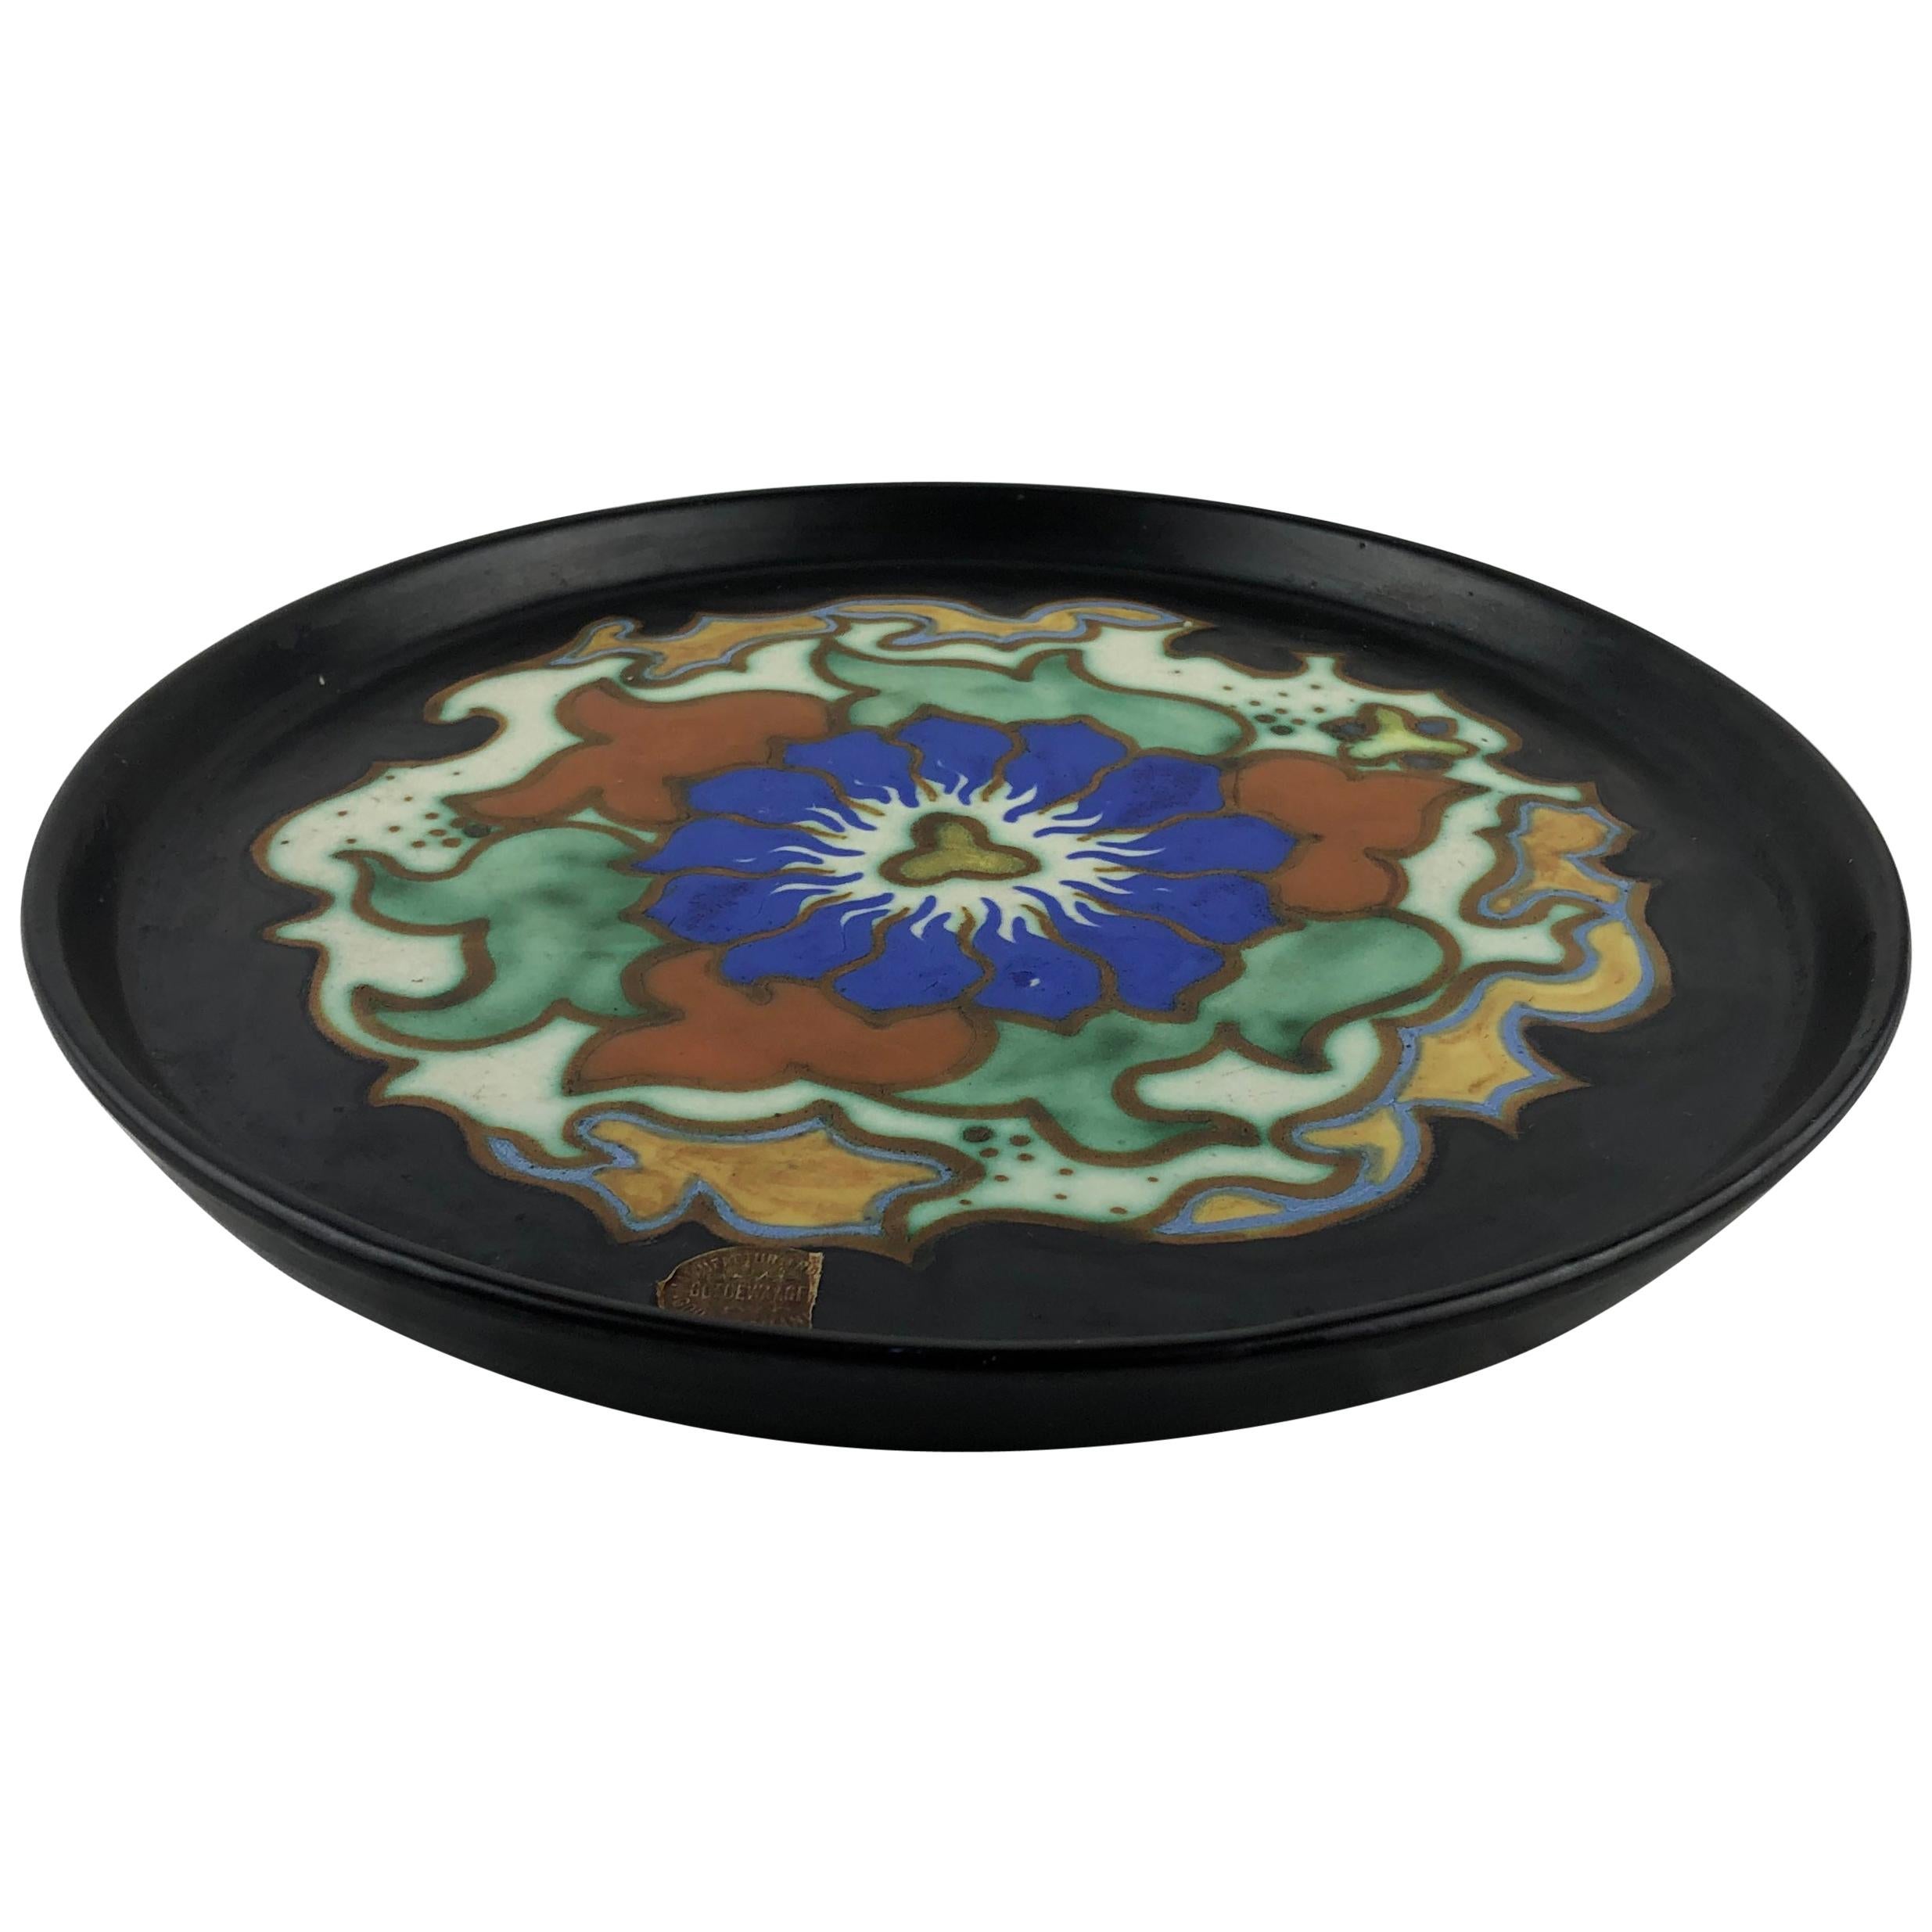 Gouda Pottery Art Nouveau Decorative Plate/Dish, Holland